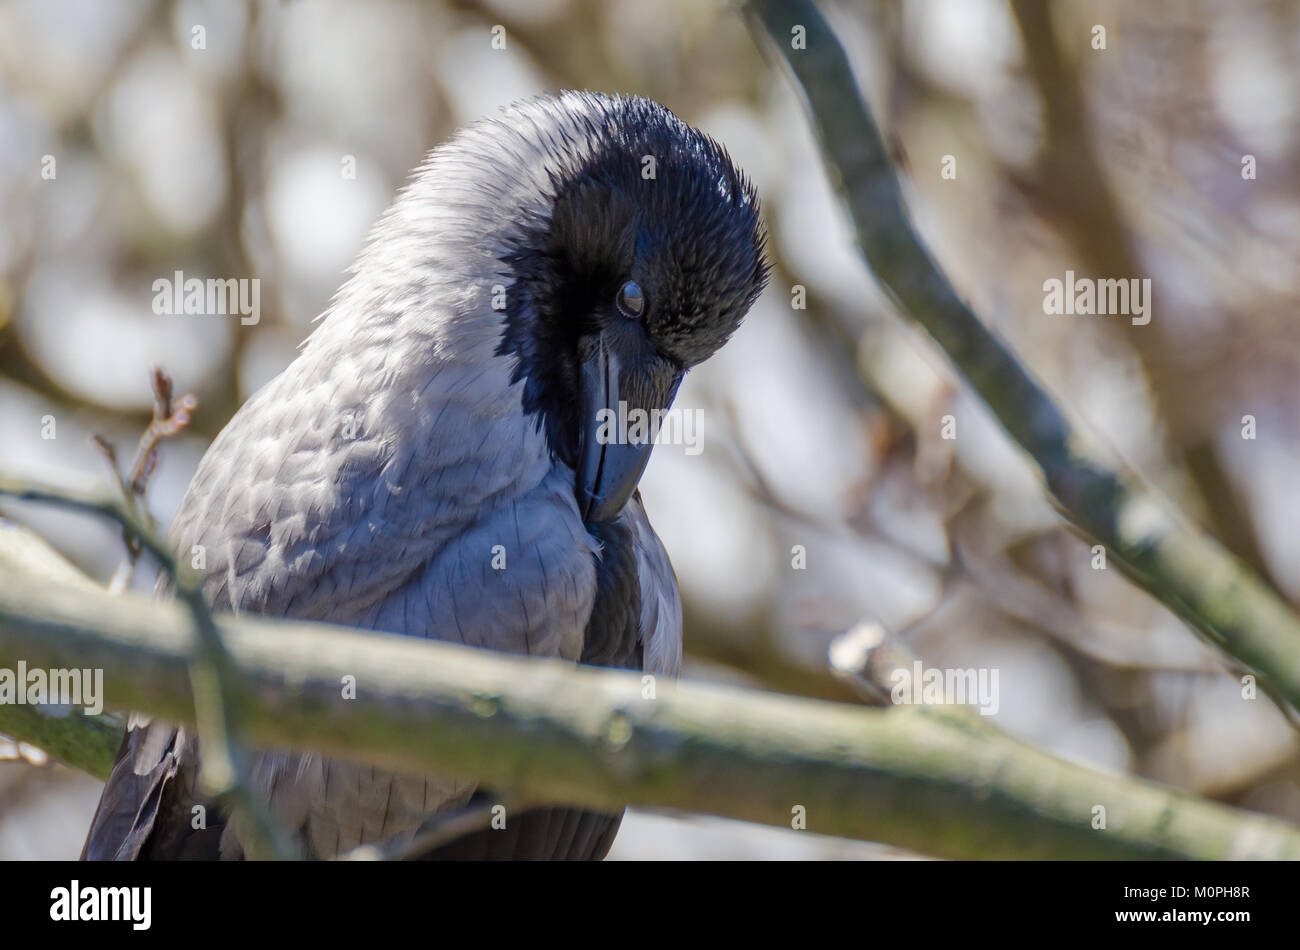 Closeup of Hooded crow or Corvus cornix bird during winter Stock Photo